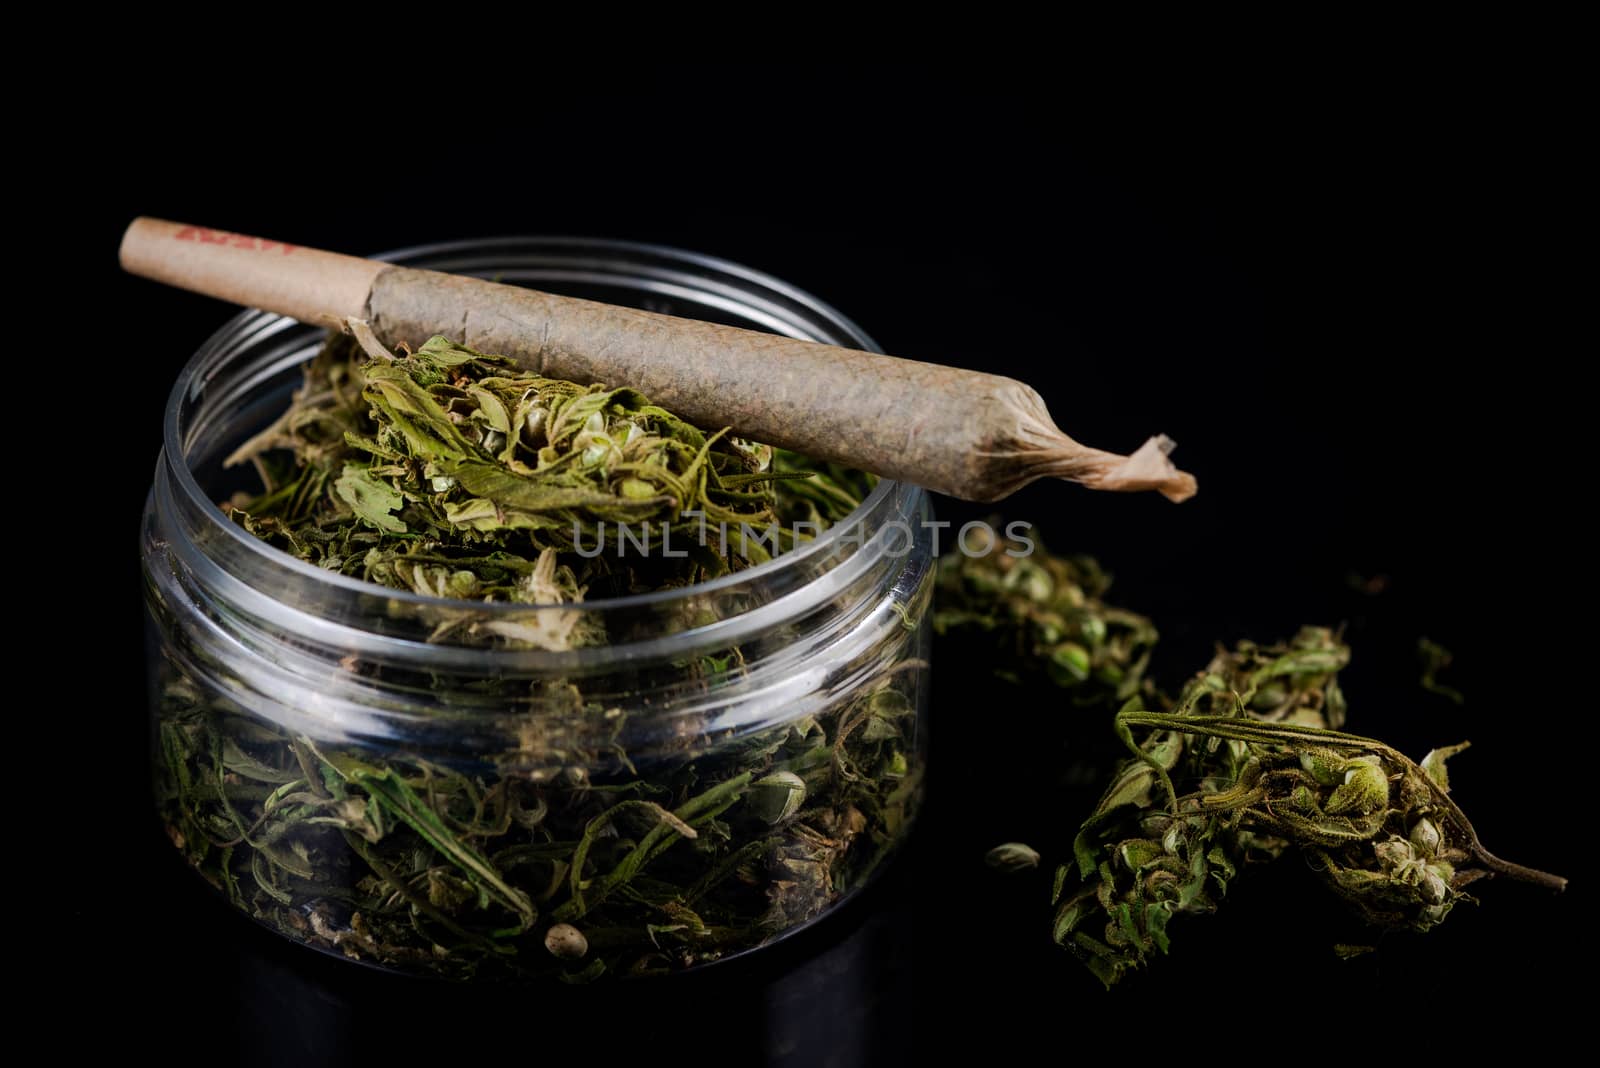 Prescription Medical Marijuana Joint and Cannabis Flower Buds in Jar. CBD and Cannabidiol Marijuana.